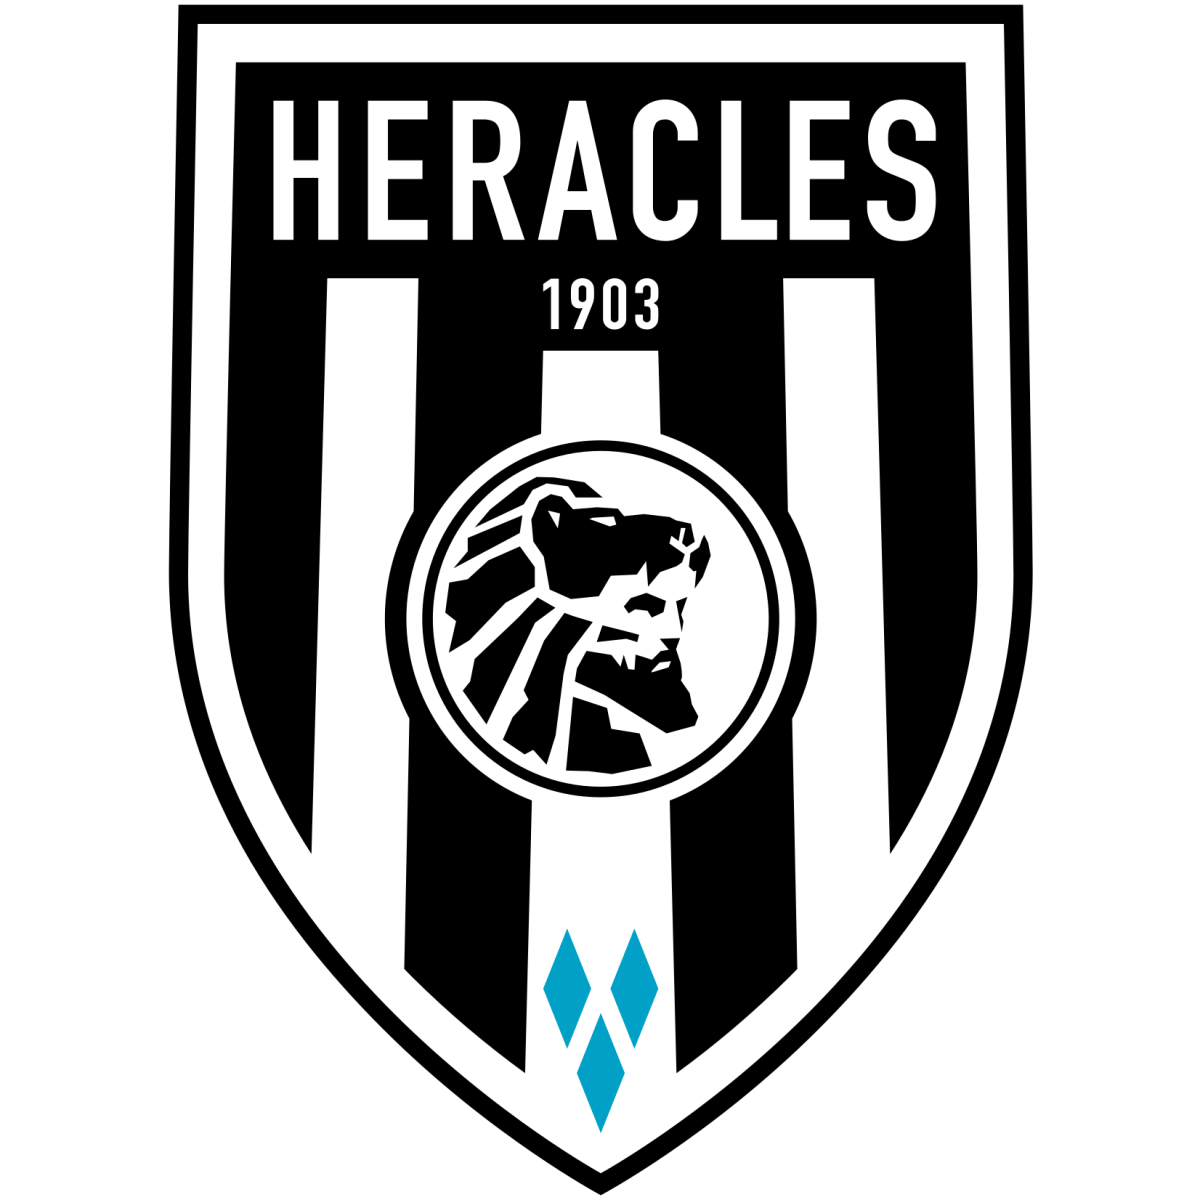 Heracles is er nog ¯\_(ツ)_/¯